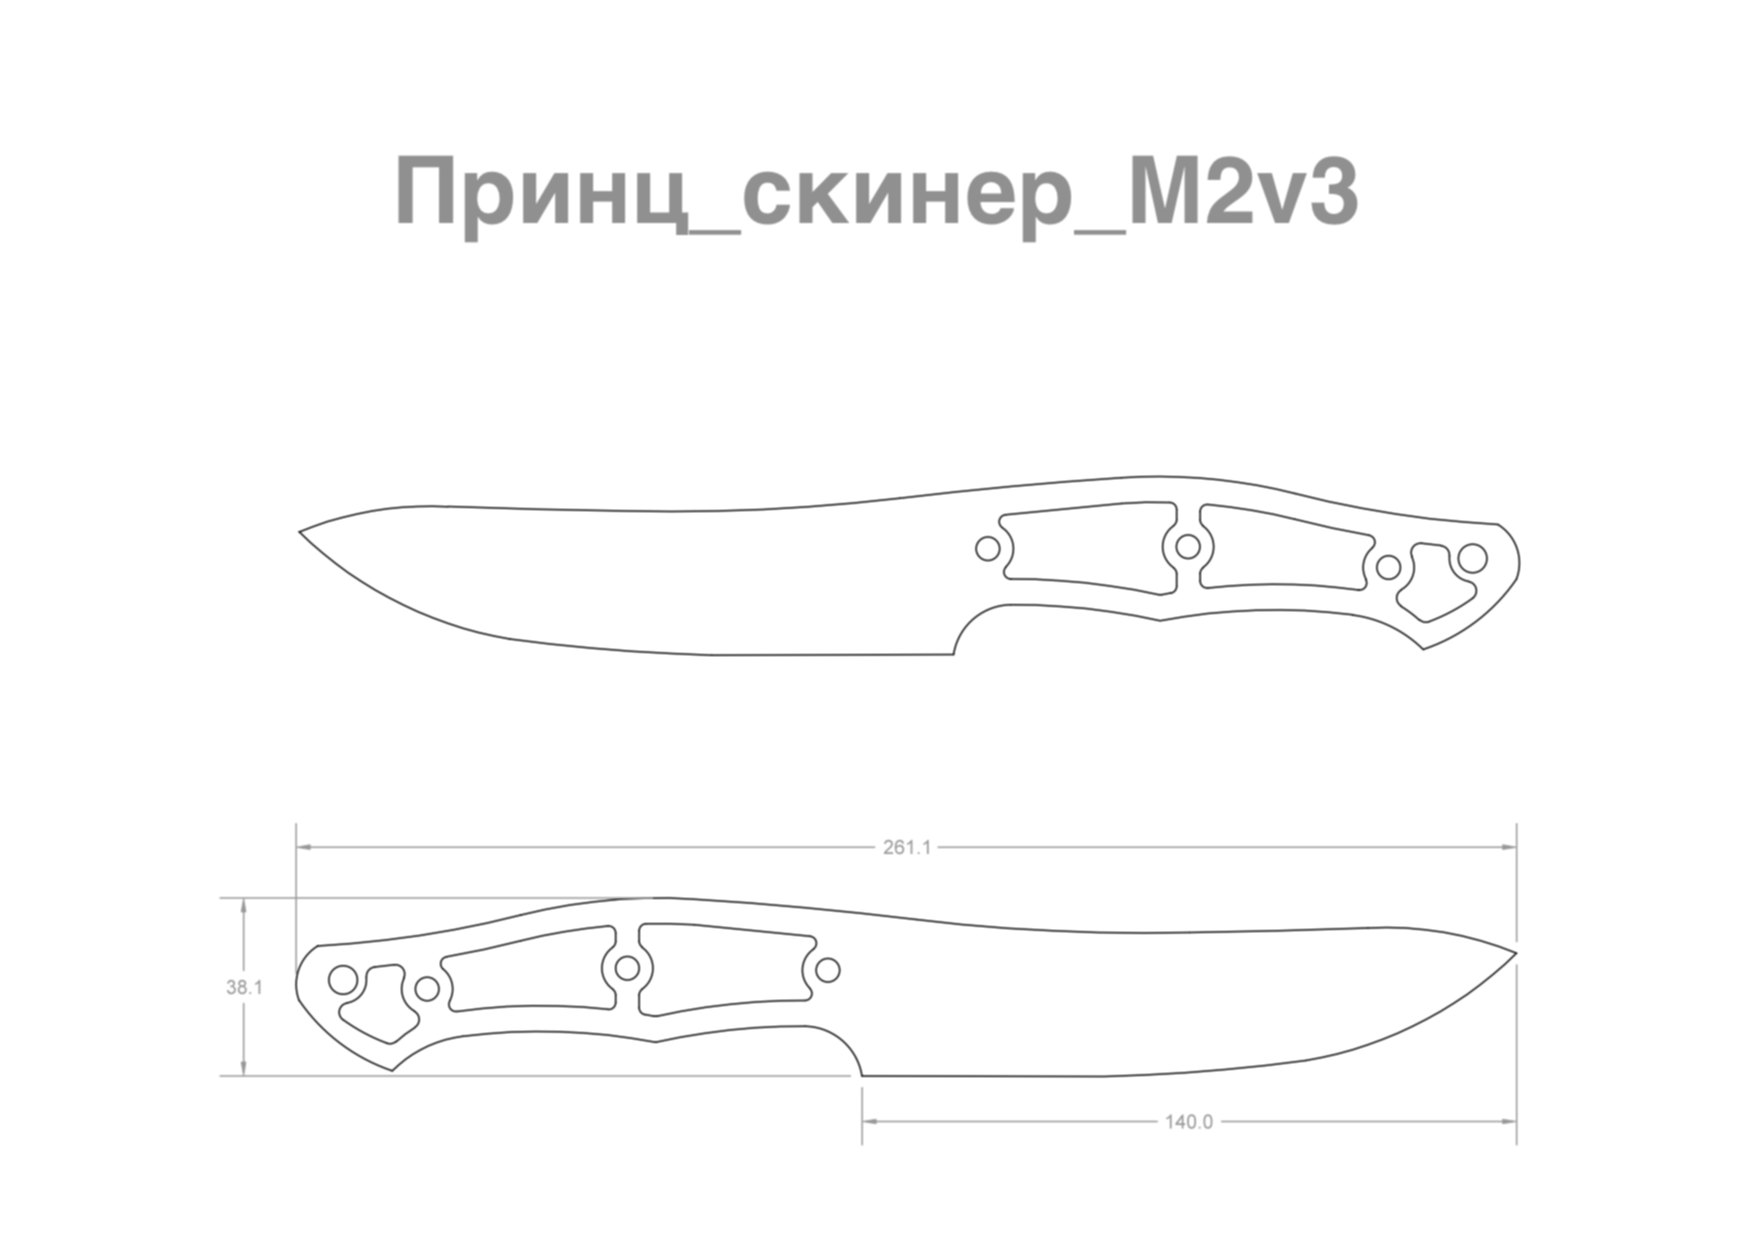 Чертежи ножей. 2 Мауи из CPM S 125 V И М 390.